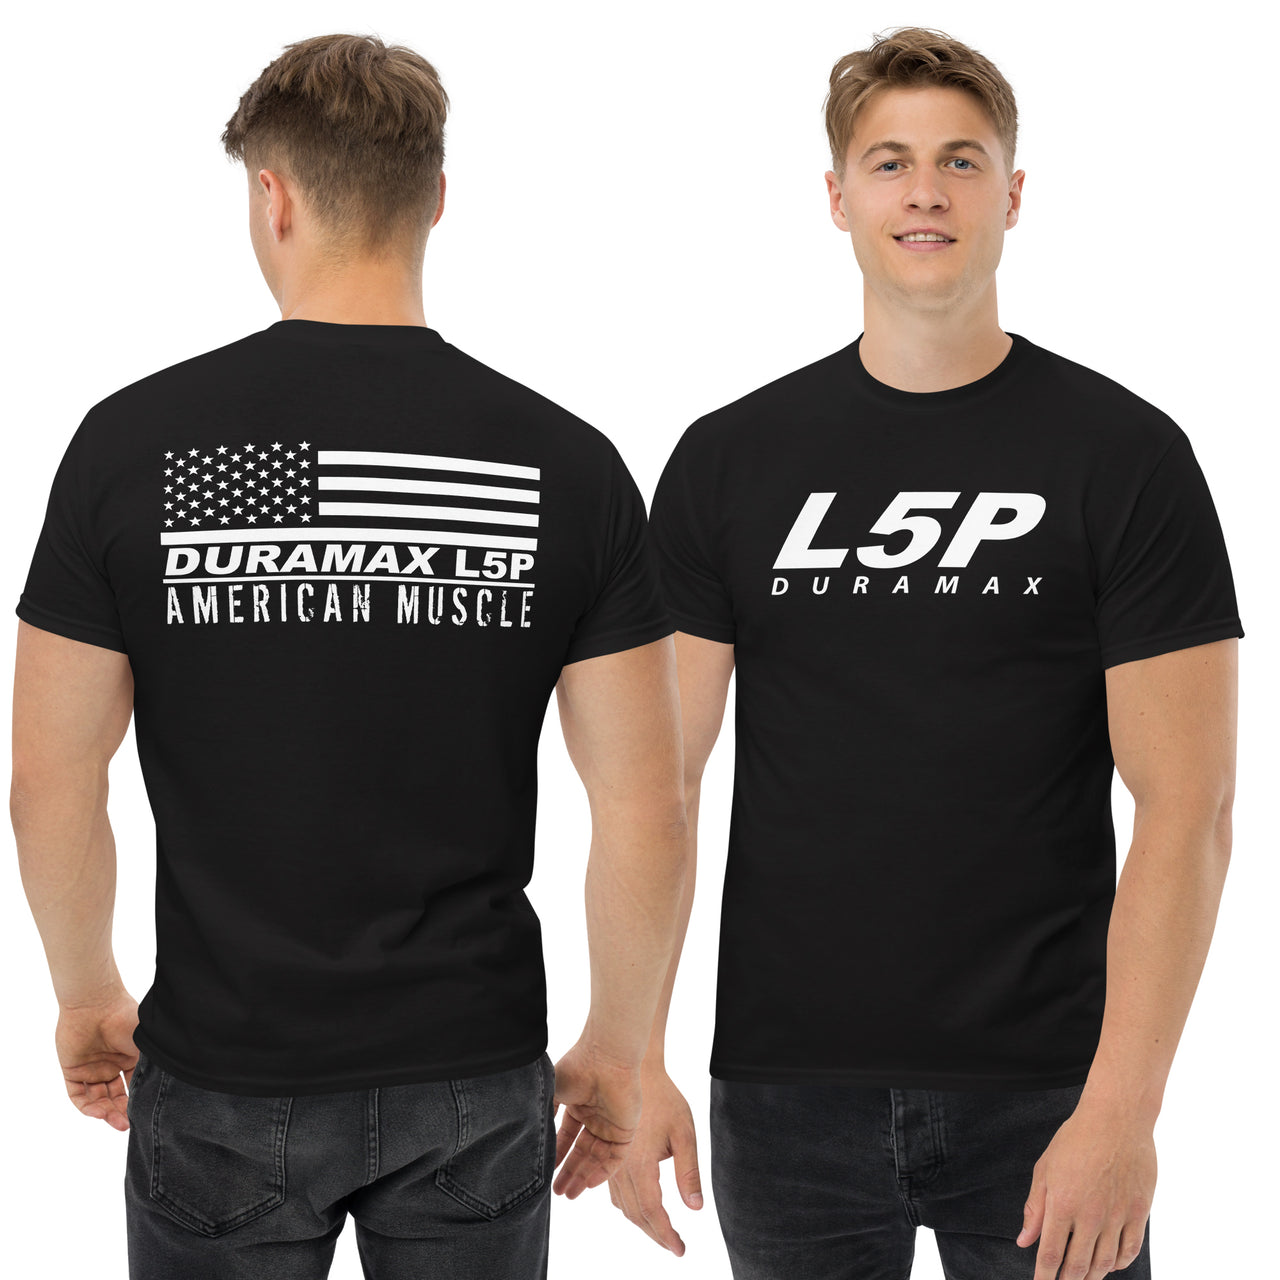 L5P Duramax Shirt Mens Diesel Truck Shirt modeled in black